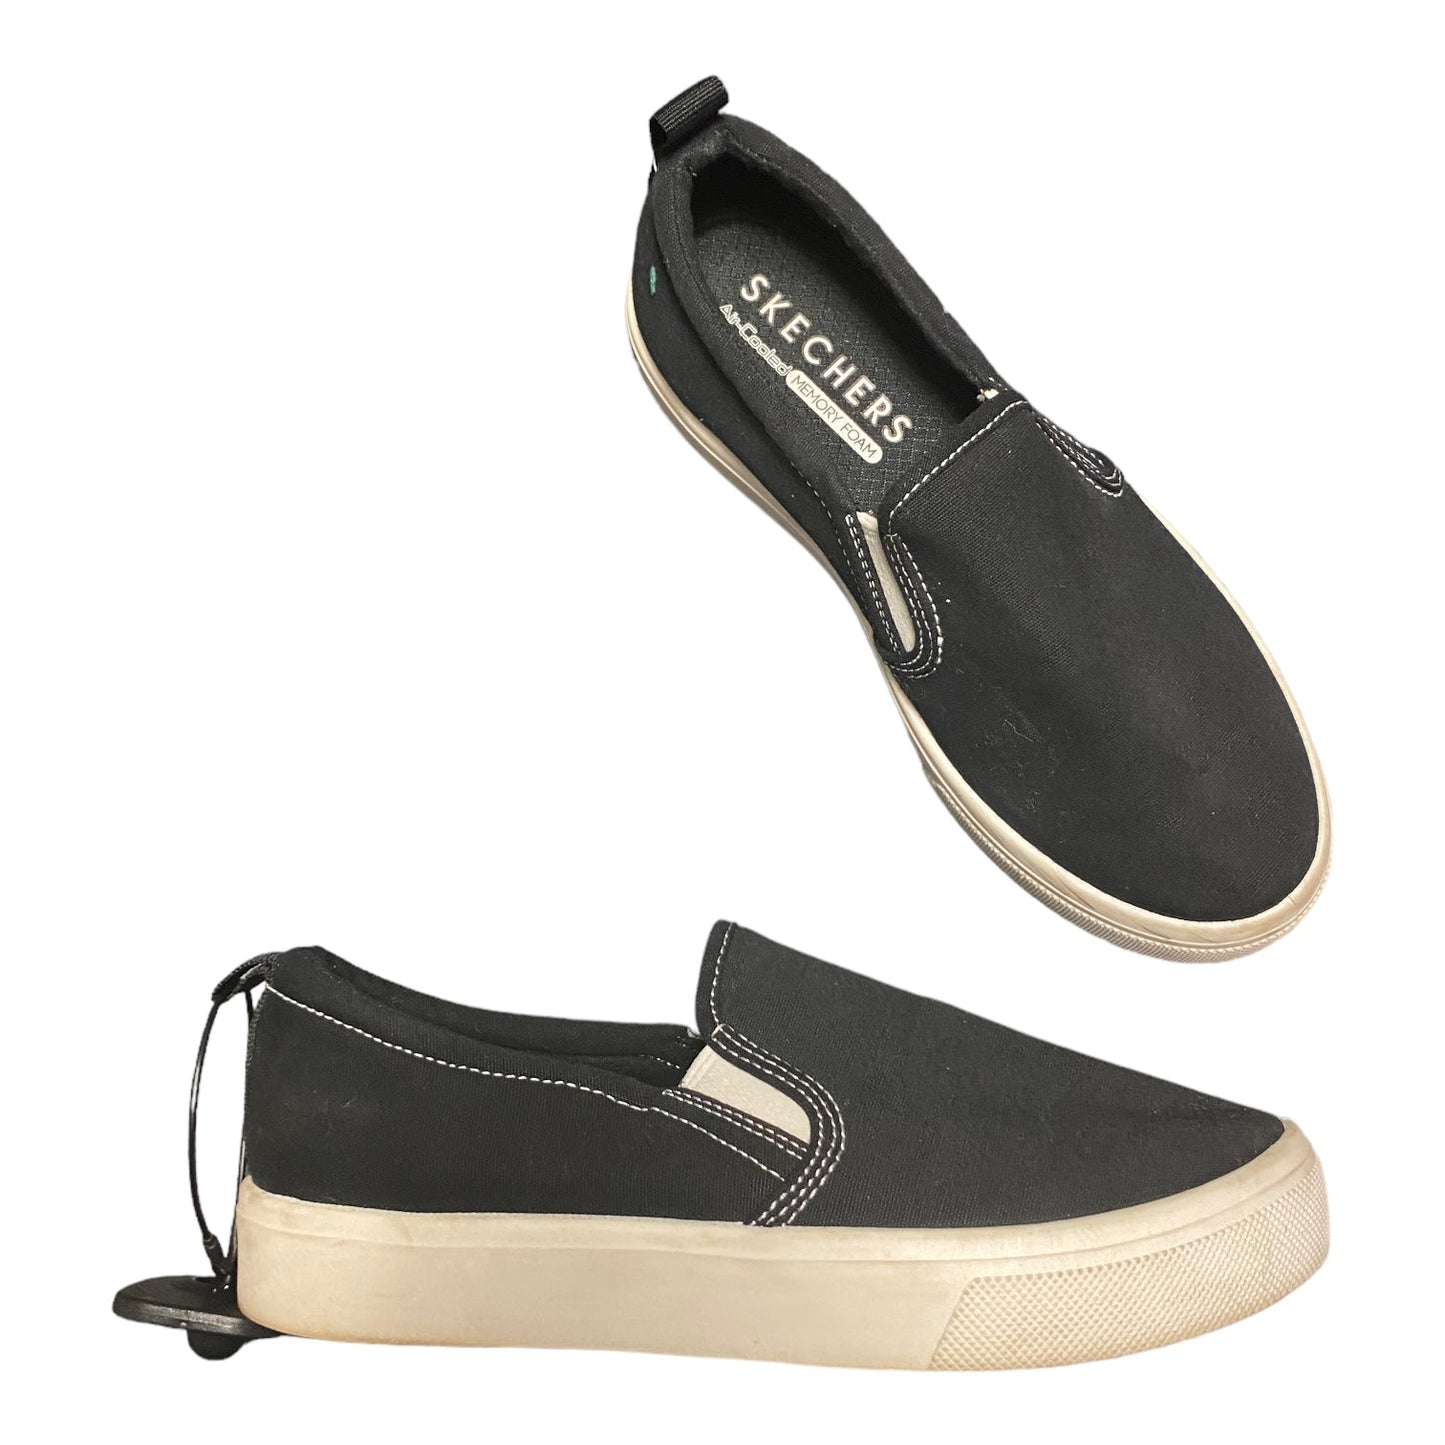 Black & White Shoes Flats Skechers, Size 6.5